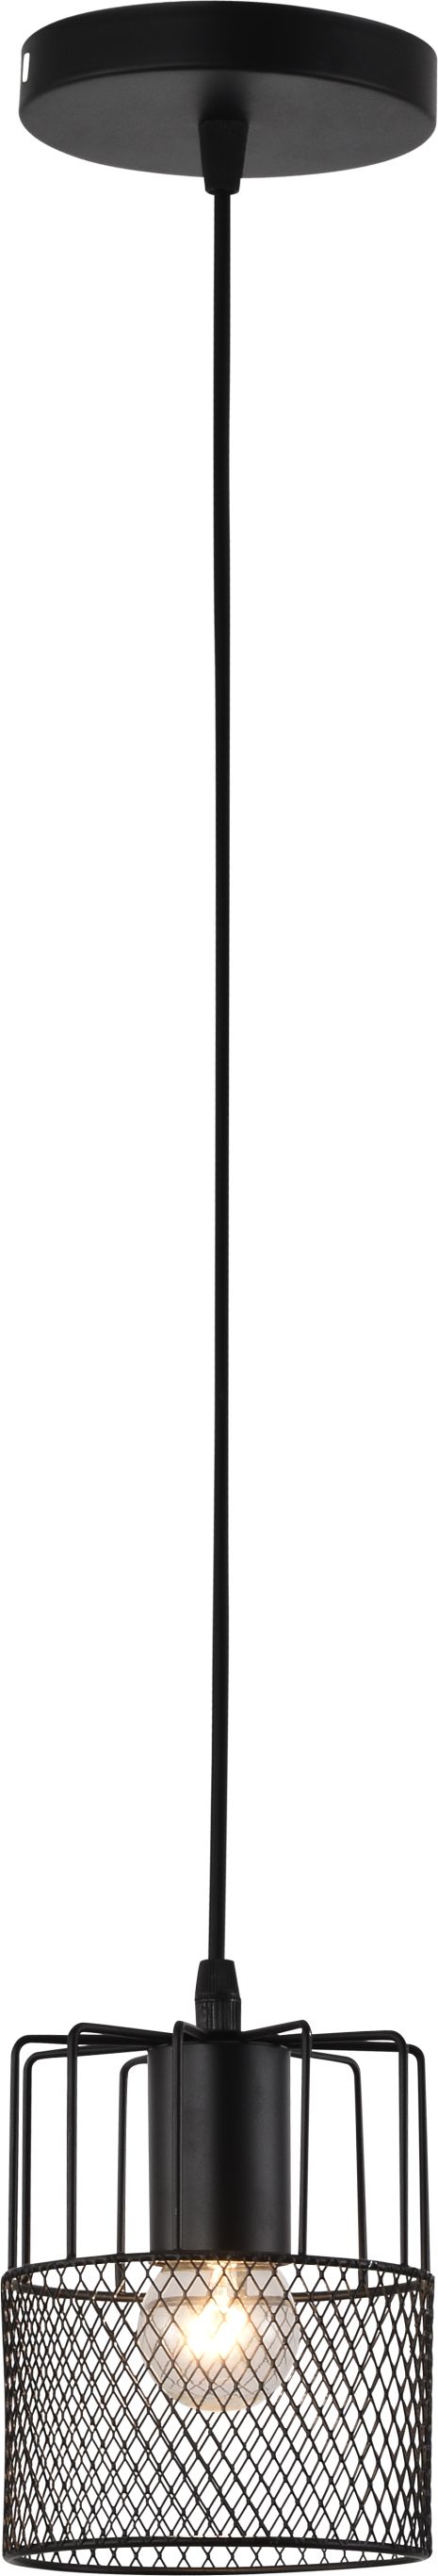 Люстра подвесная в стиле лофт Sirius XA3212/1 BK черная